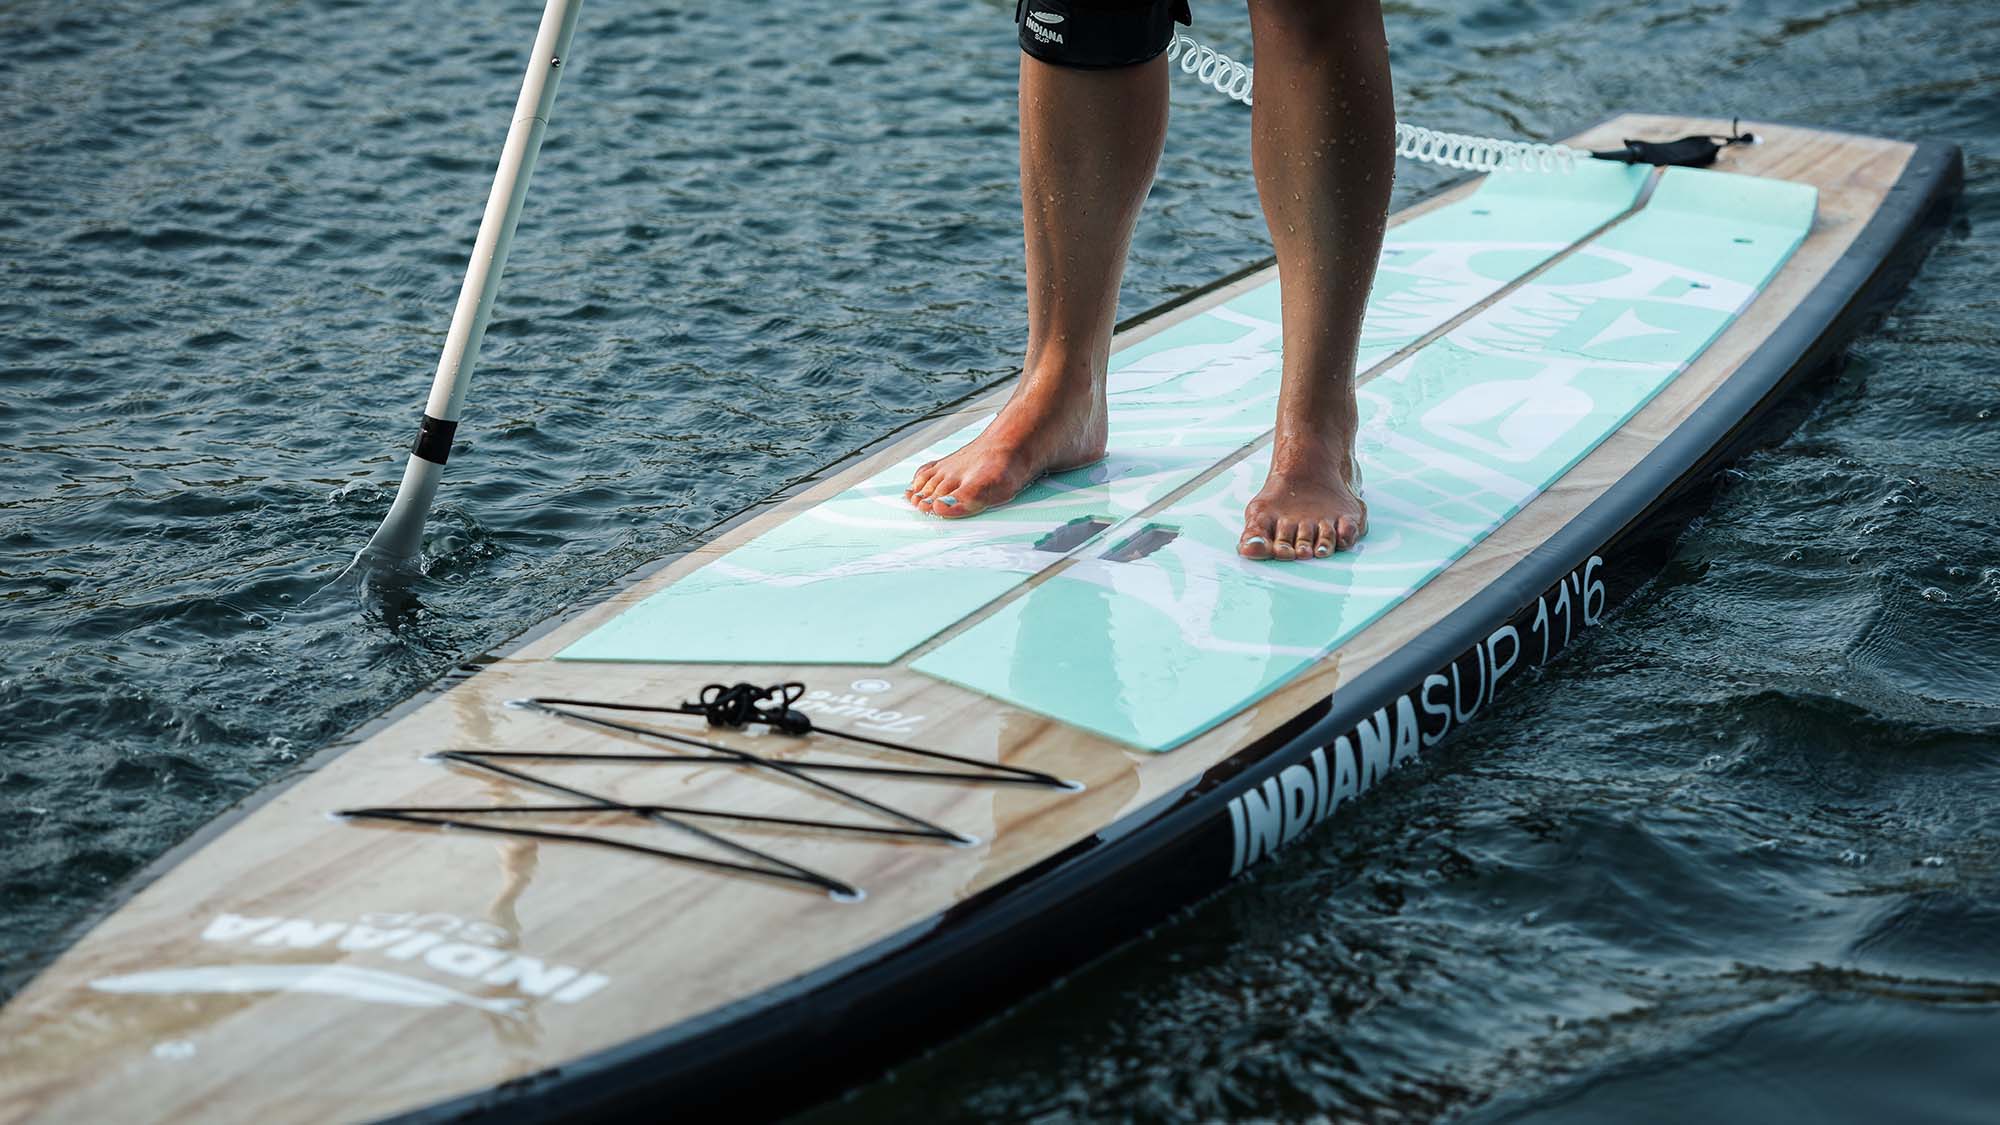 Maurus Strobel + Indiana Paddle & Surf: “Only design boards that